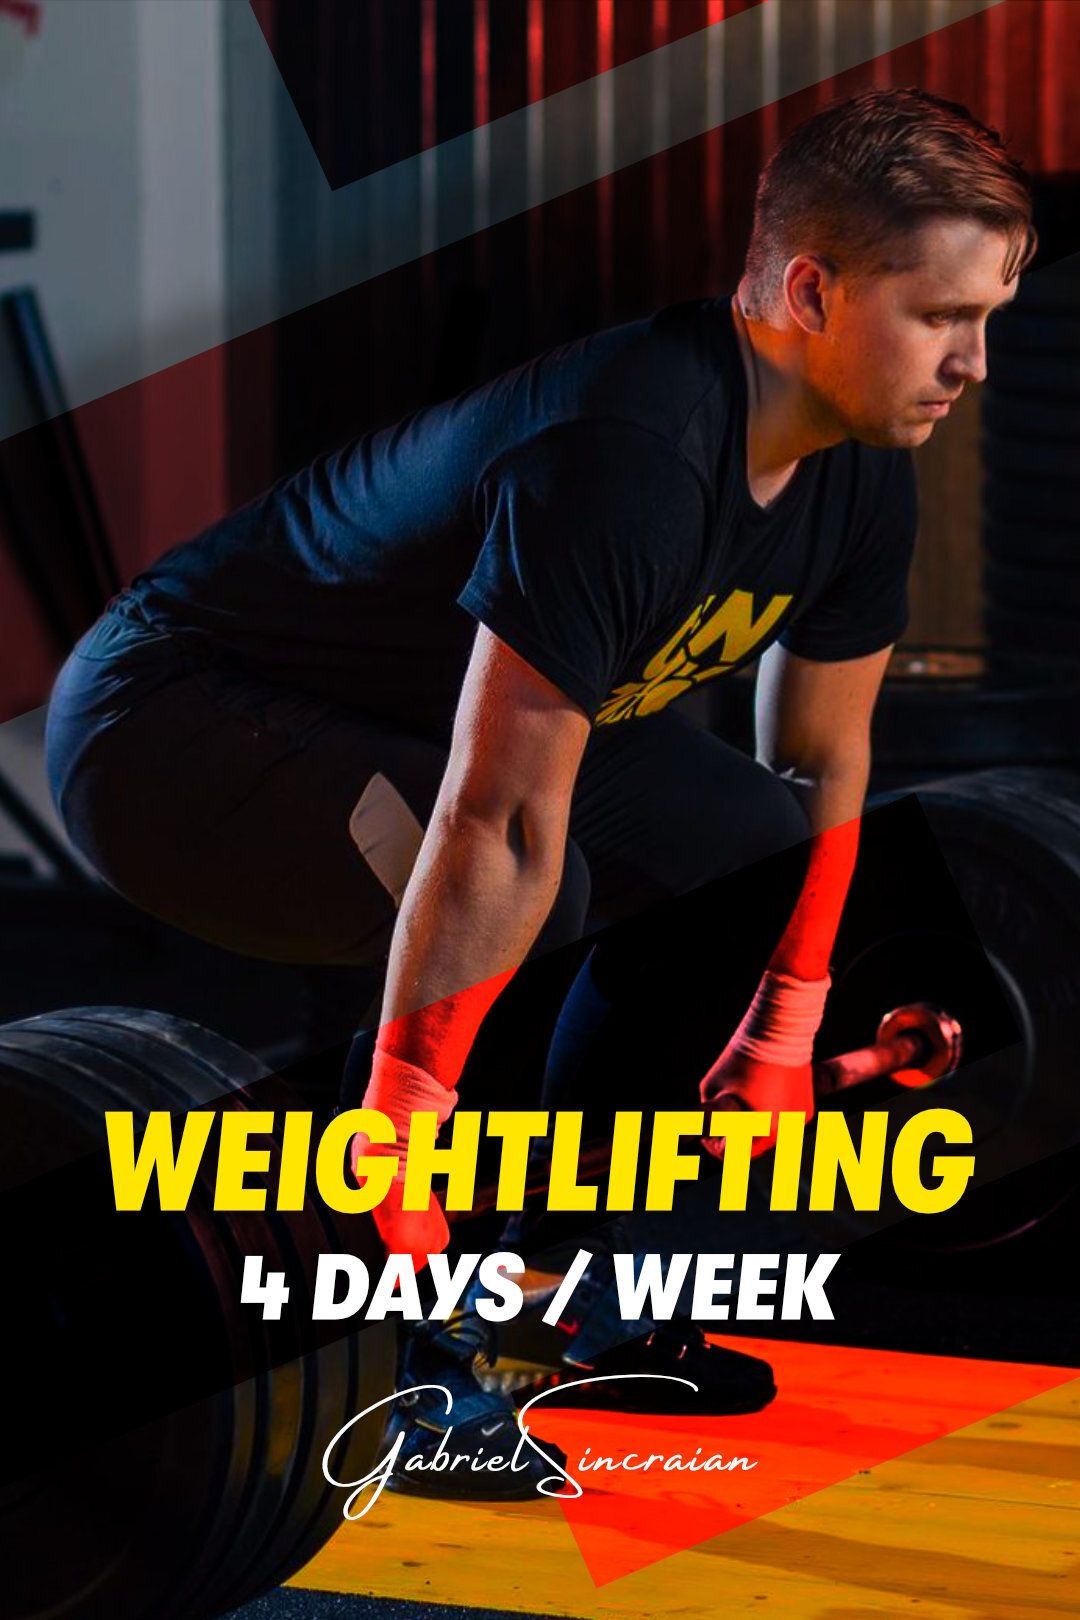 Gabriel Sîncrăian - 4 Days / Week Weightlifting